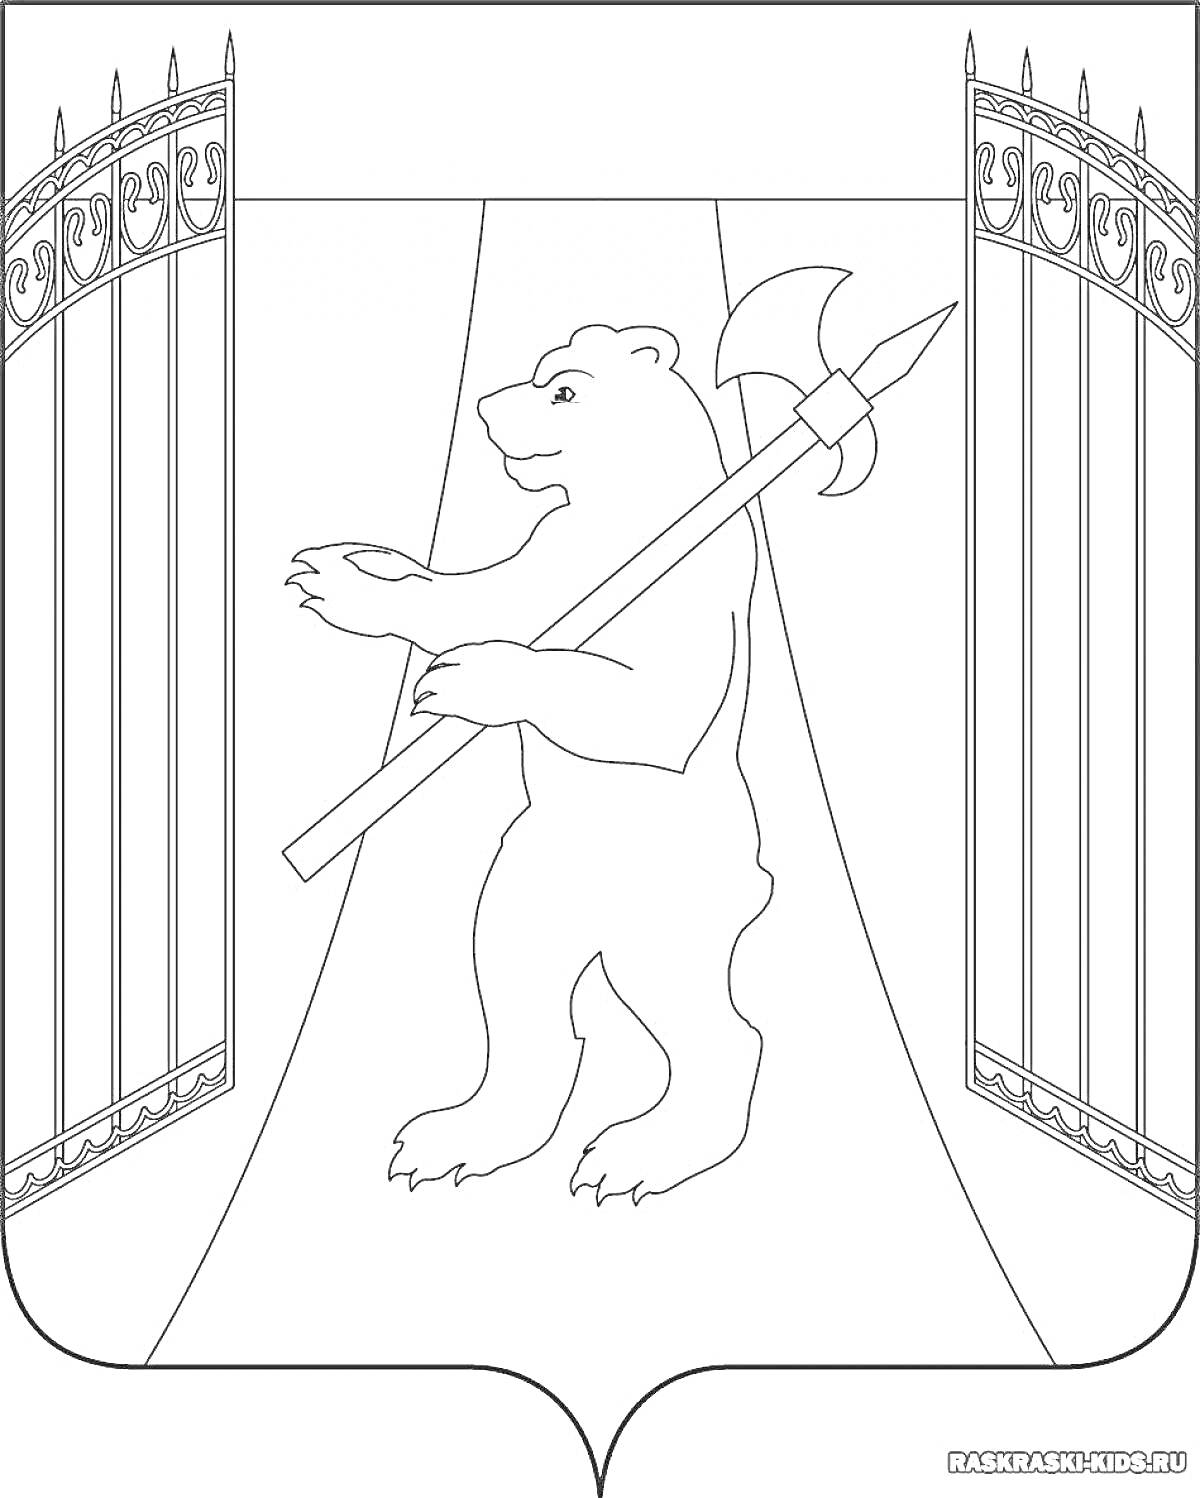 Раскраска Герб Ярославля с медведем, держащим топор, на фоне ворот